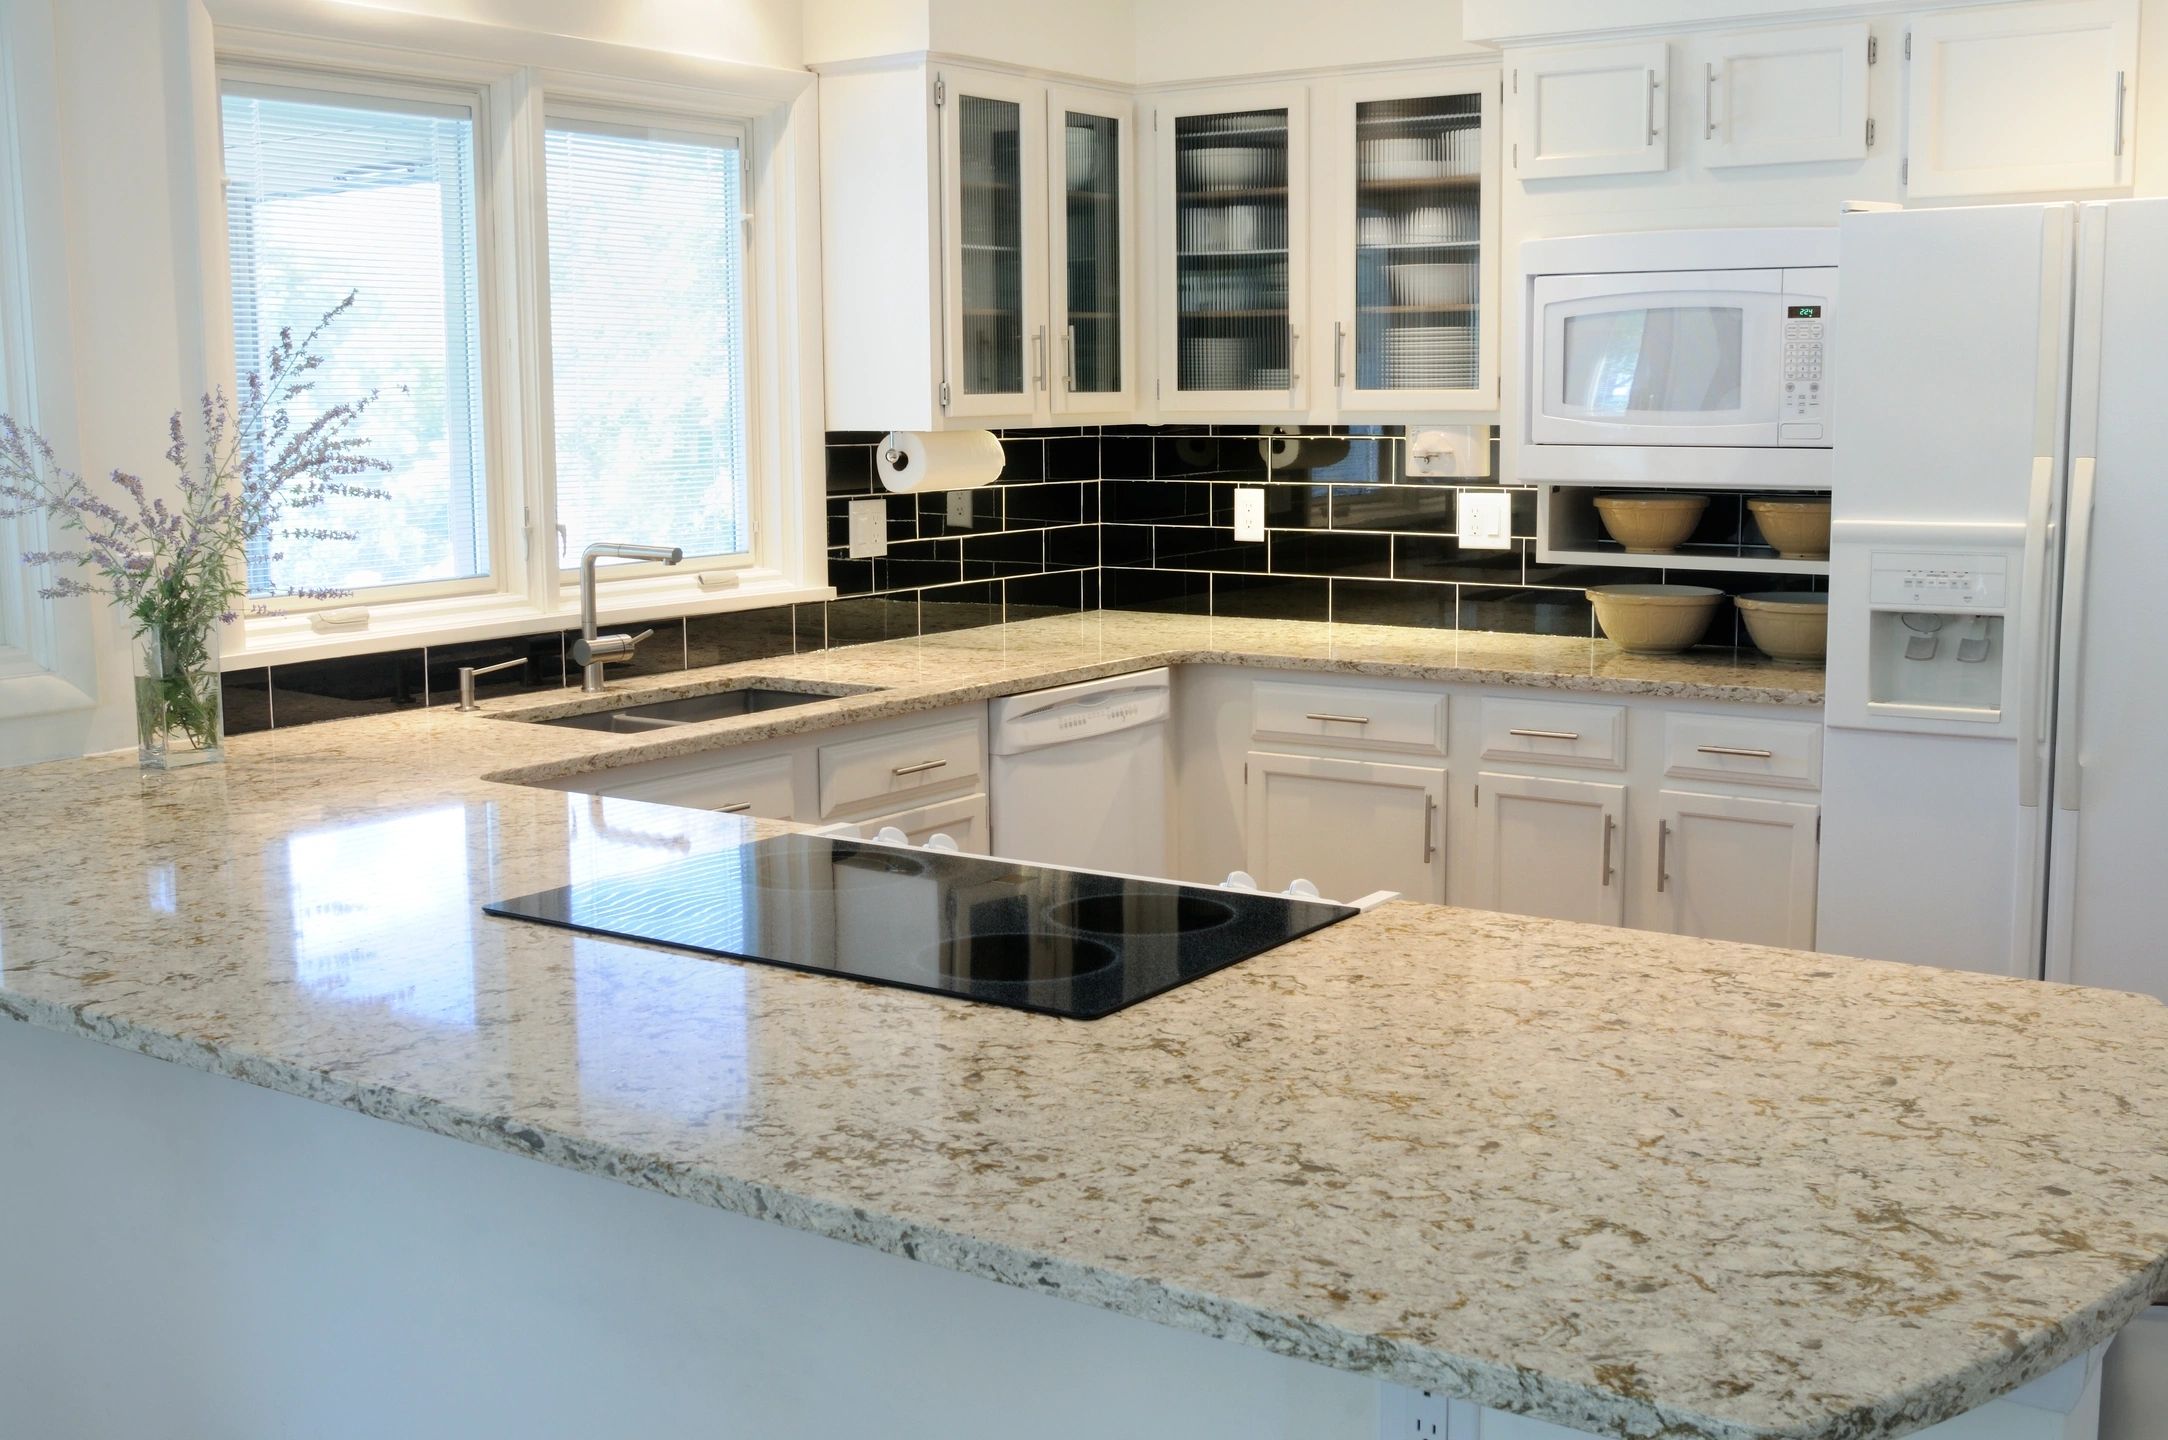 Todays Designer Kitchens qtq80-UU2ffj Granite Counters - Top Trends Now 